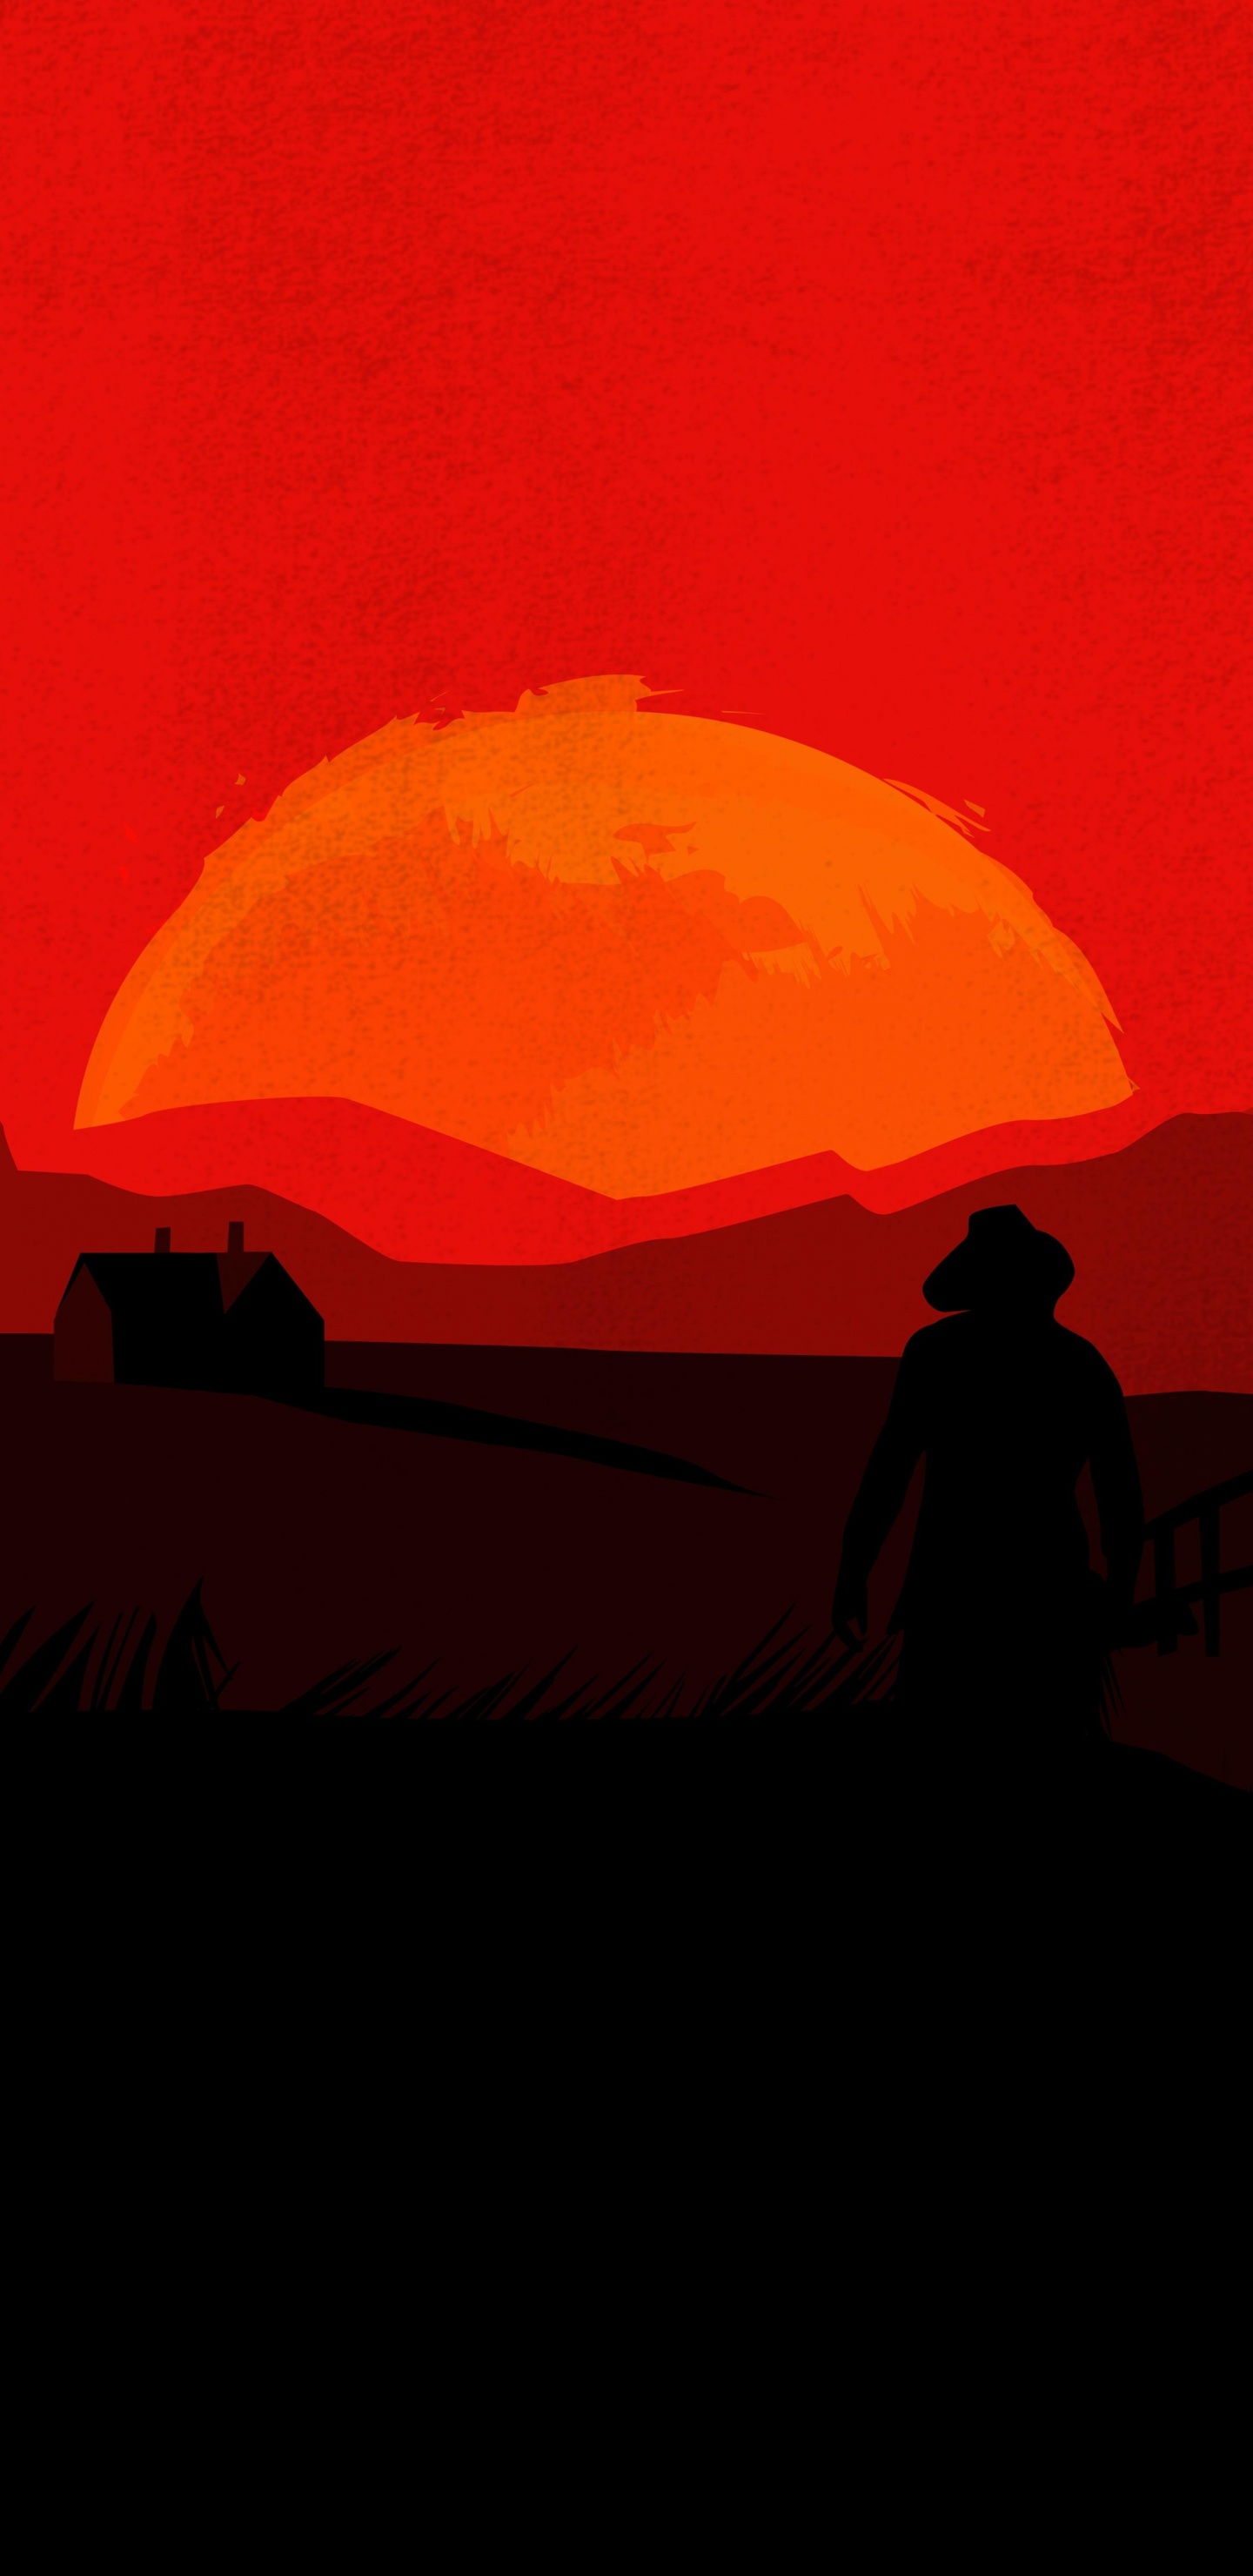 Red Dead Redemption 2, Red Dead Redemption, Red, Afterglow, Sunset. Wallpaper in 1440x2960 Resolution